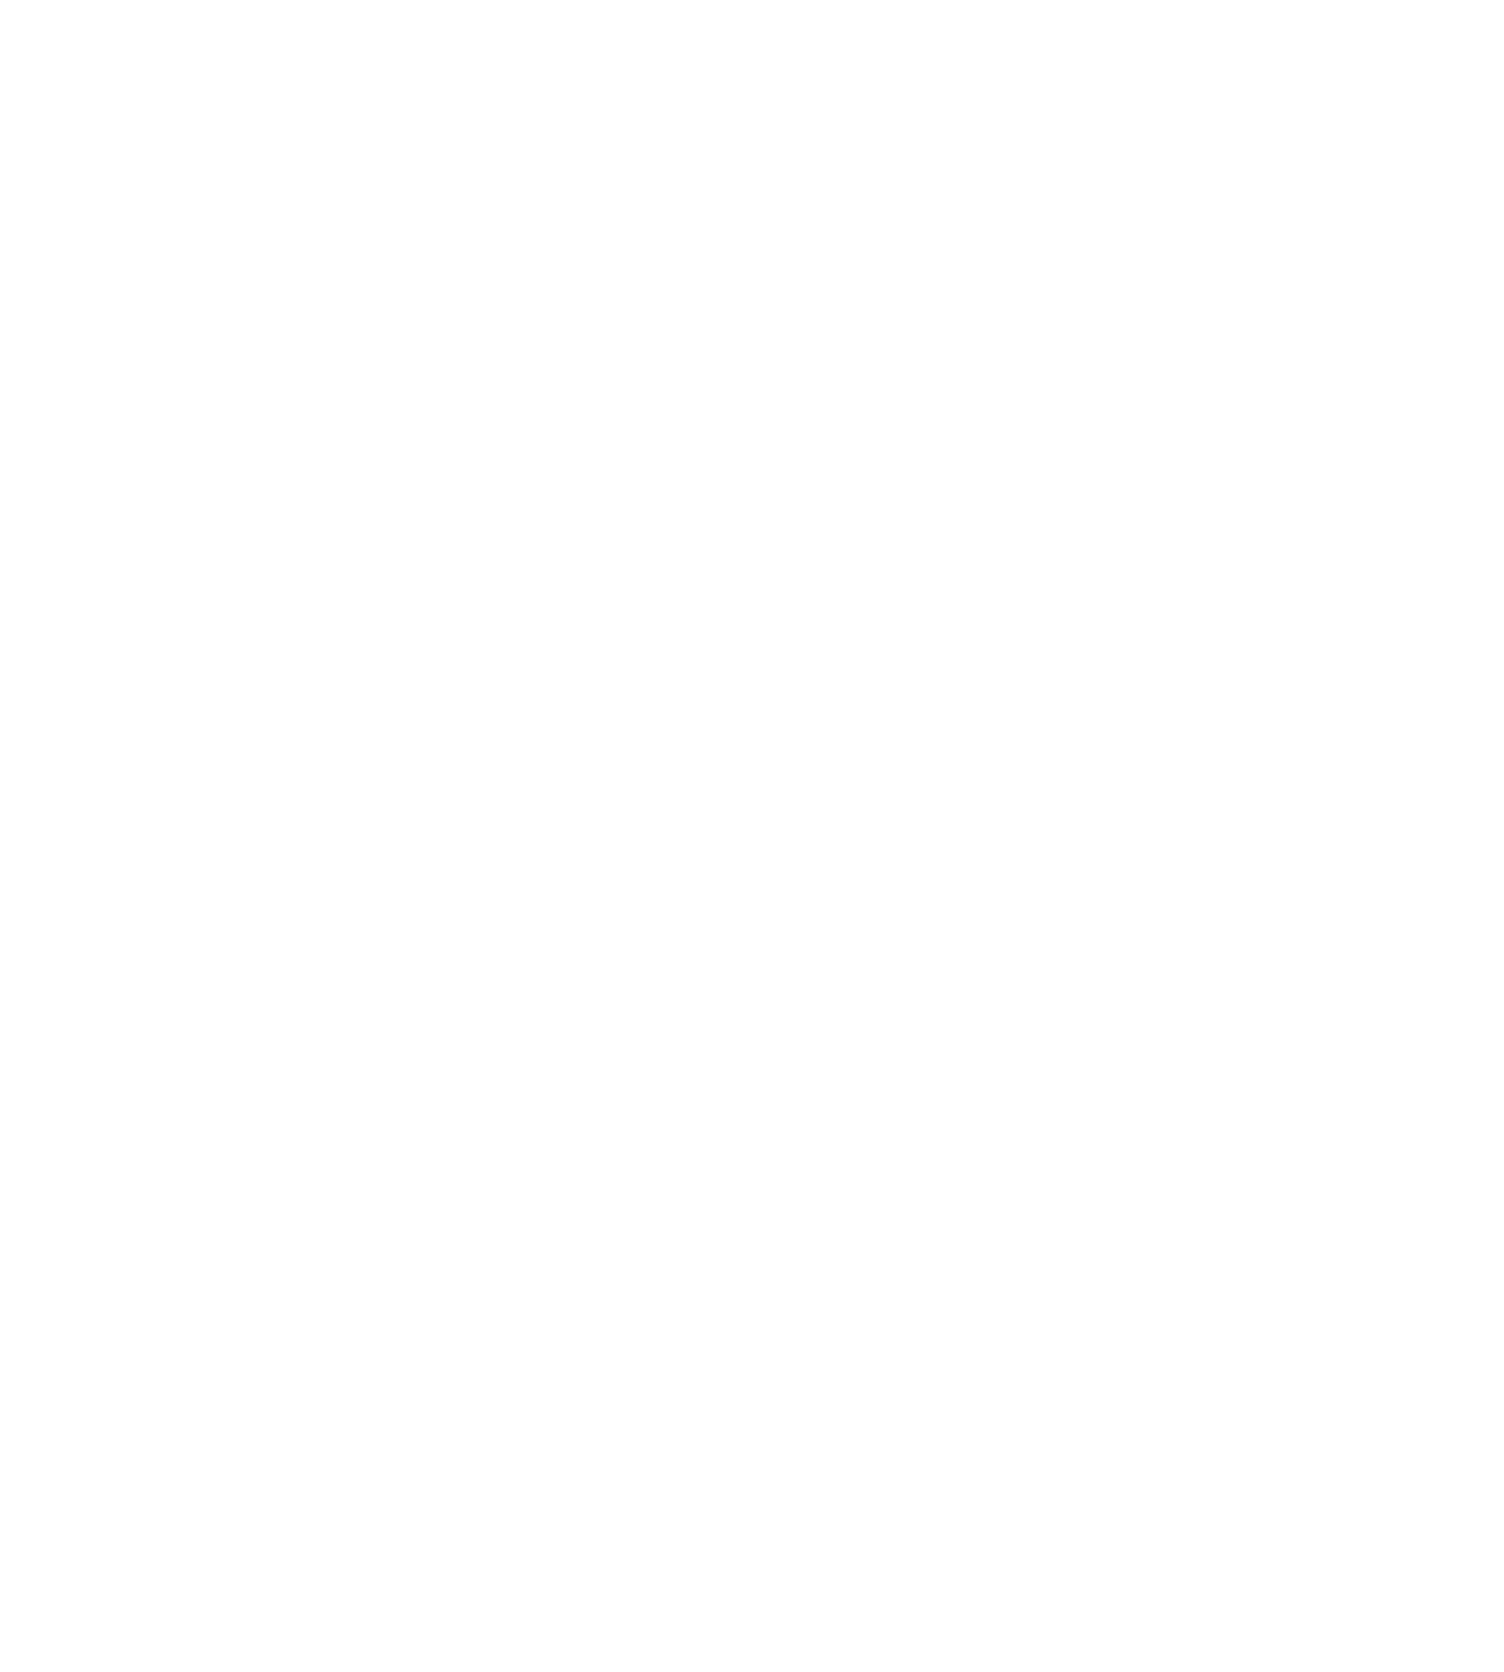 ERAU Eagle Logo